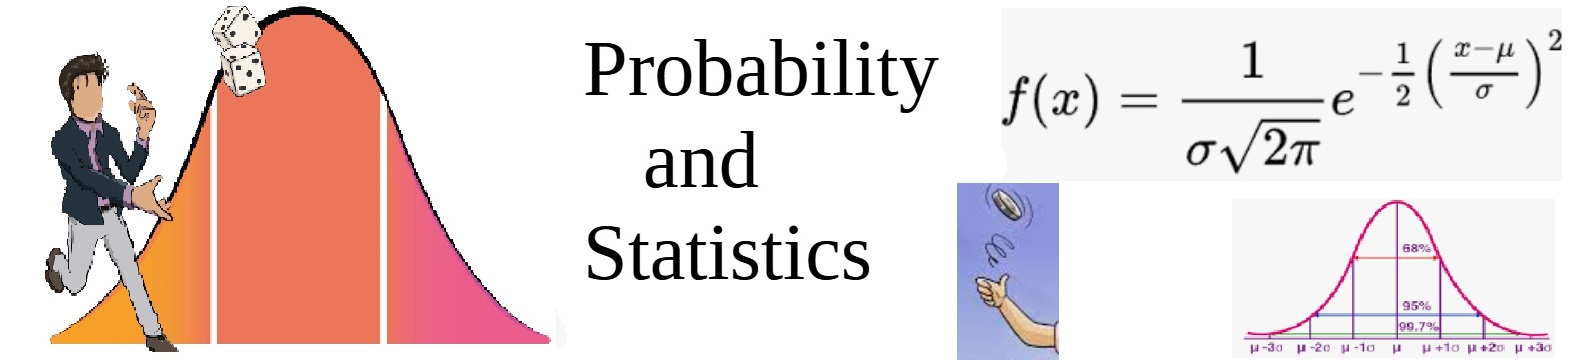 PROBABILITY AND STATISTICS